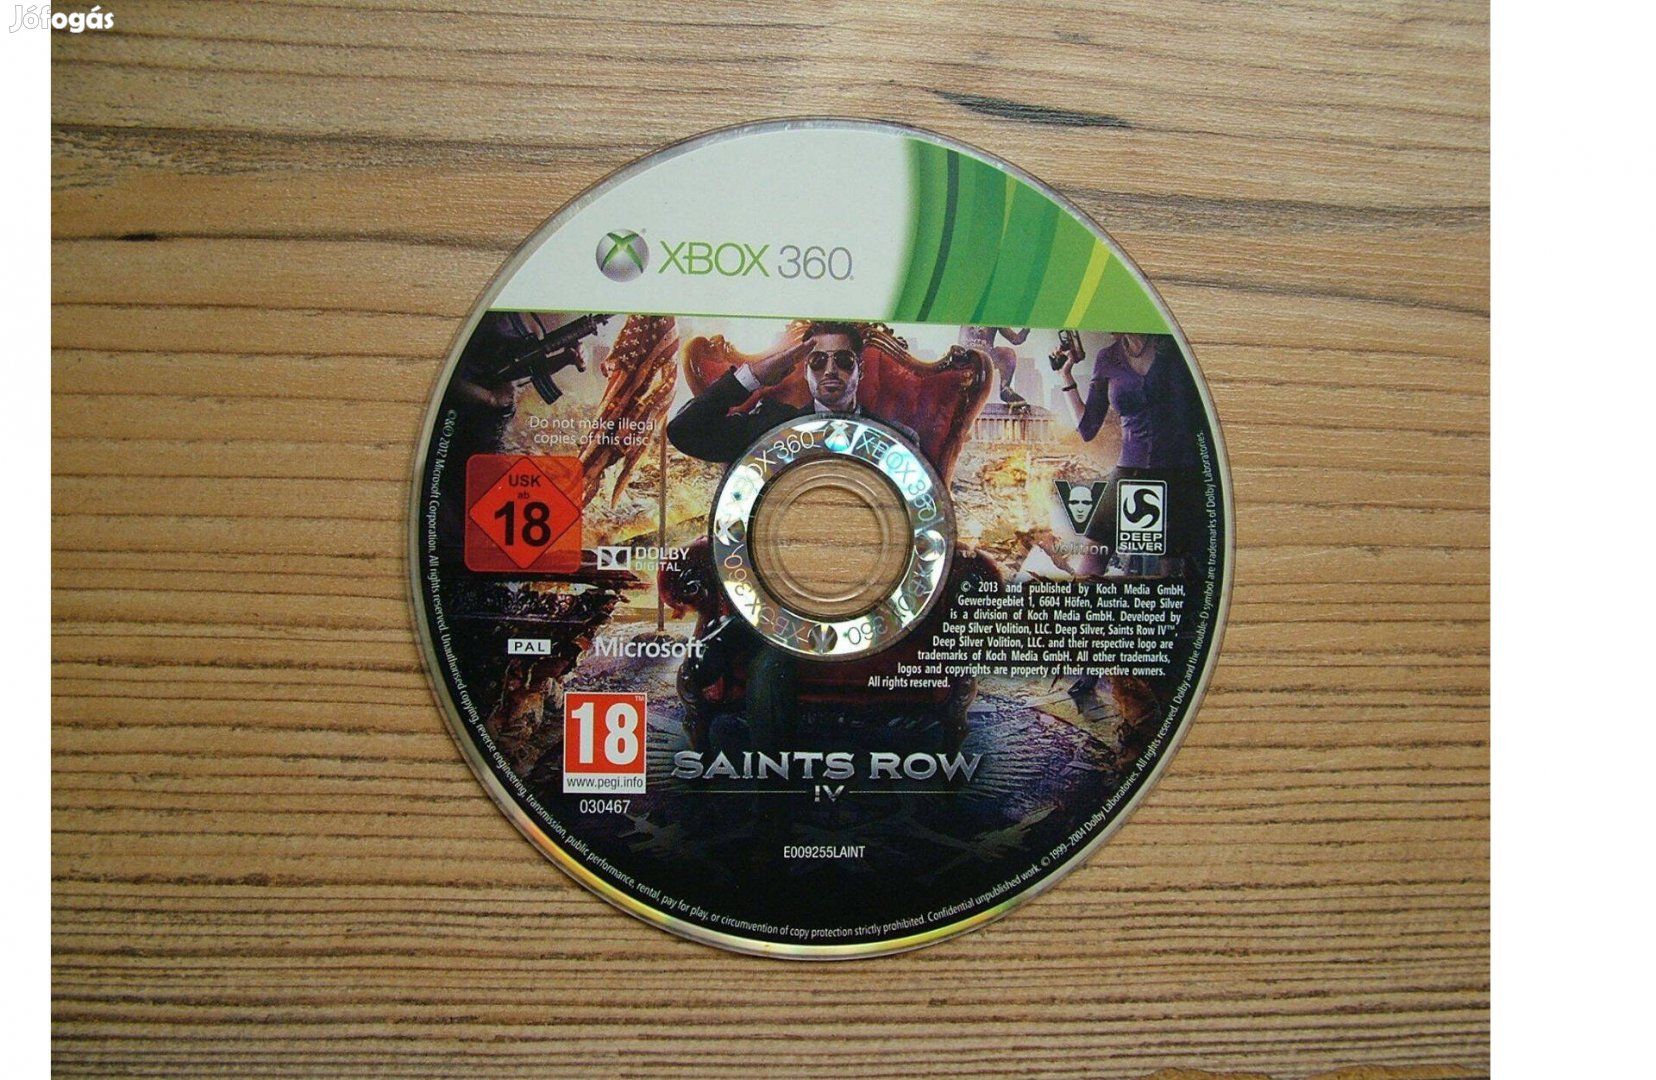 Xbox 360 Saints Row IV 4 Xbox One is